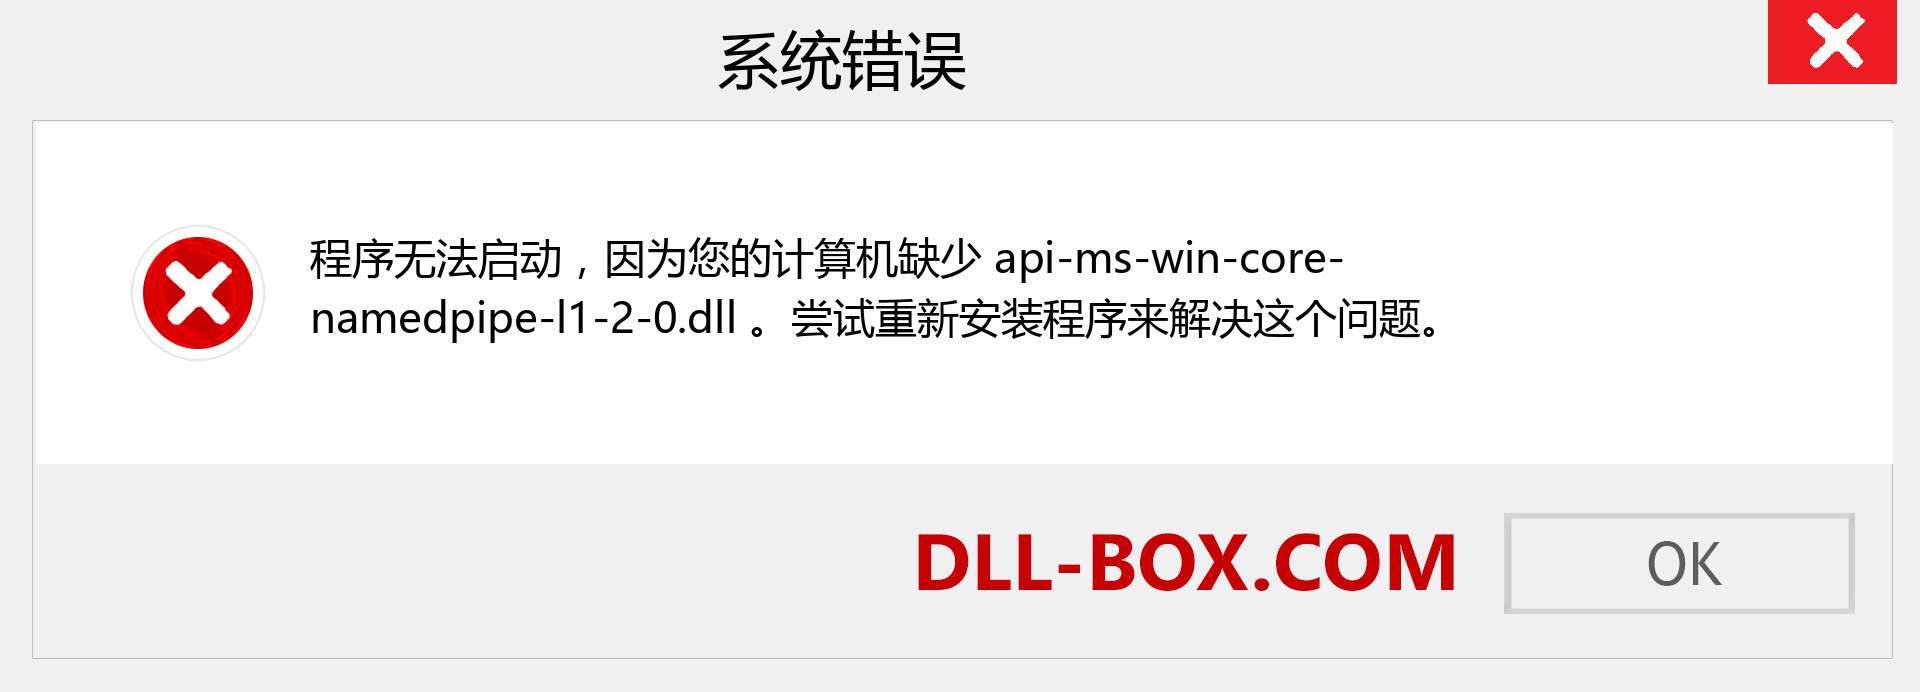 api-ms-win-core-namedpipe-l1-2-0.dll 文件丢失？。 适用于 Windows 7、8、10 的下载 - 修复 Windows、照片、图像上的 api-ms-win-core-namedpipe-l1-2-0 dll 丢失错误